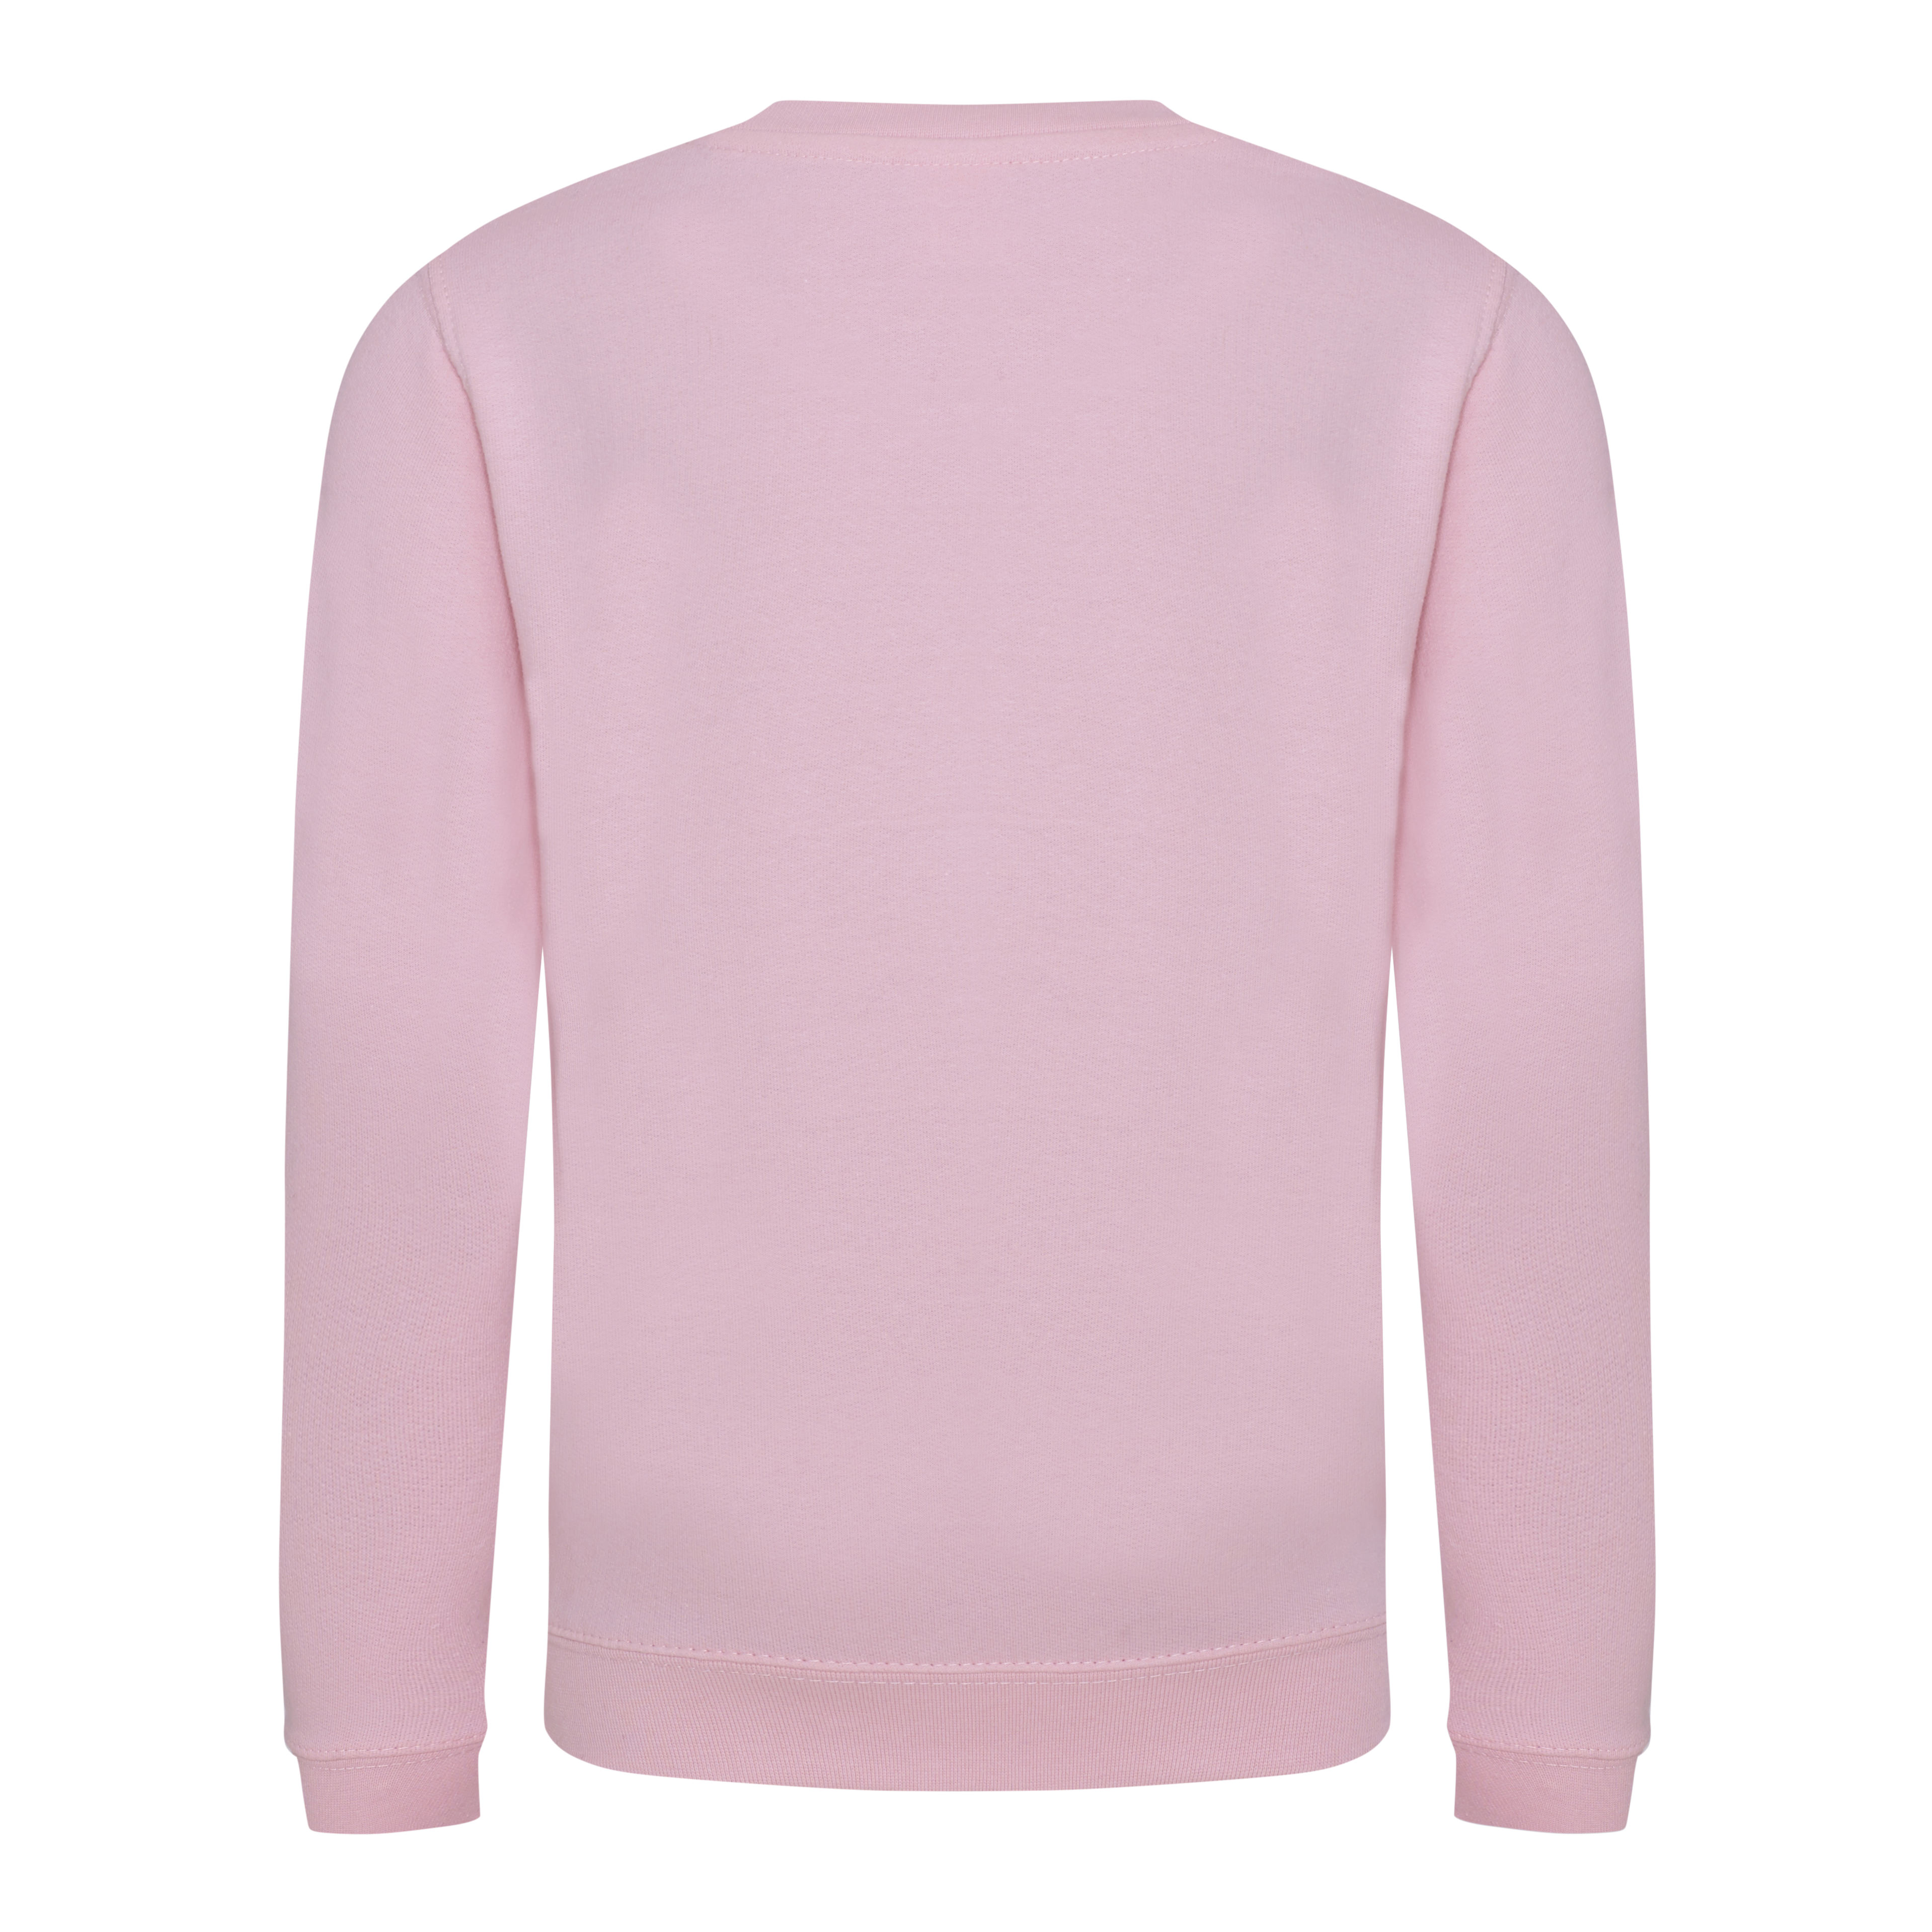 Rabatt 91 % Pink baby sweatshirt Rosa 12Y KINDER Pullovers & Sweatshirts Glitzer 